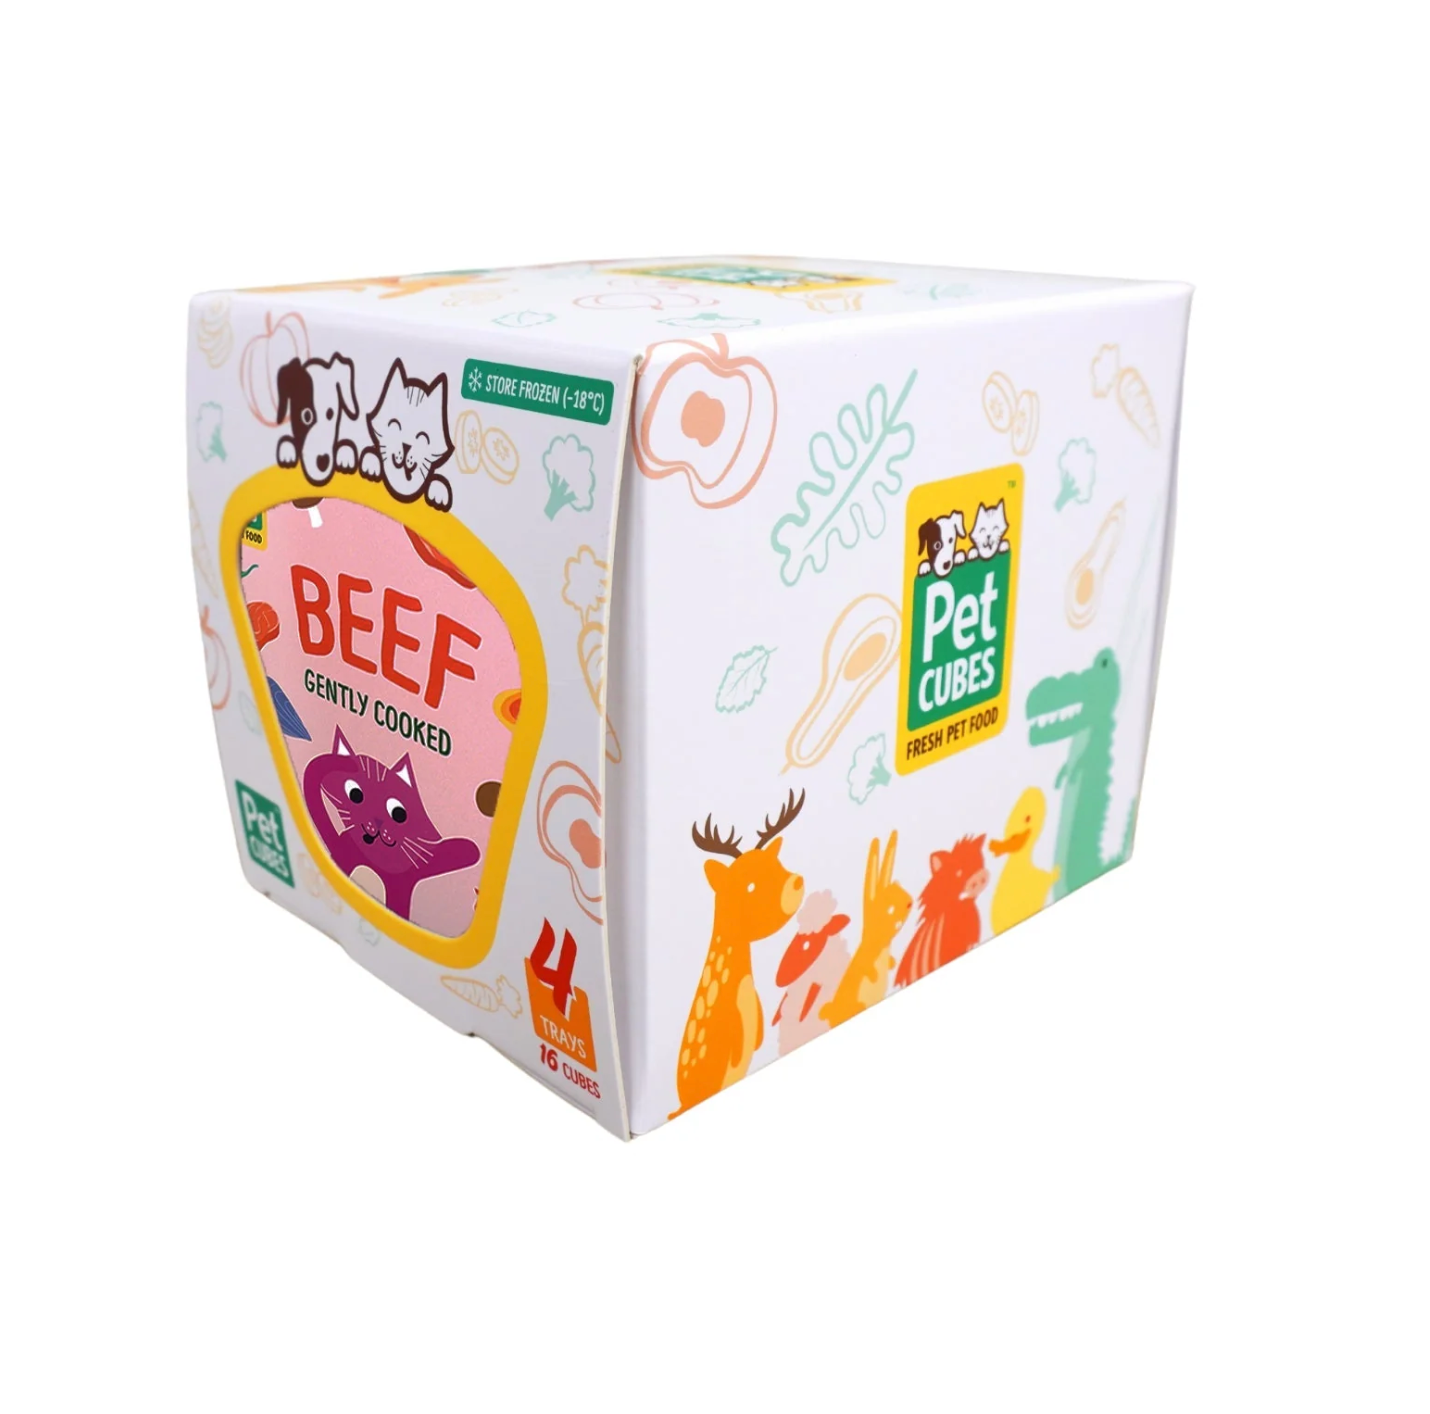 PetCubes Gently Cooked Beef Cat Food – 1 Case